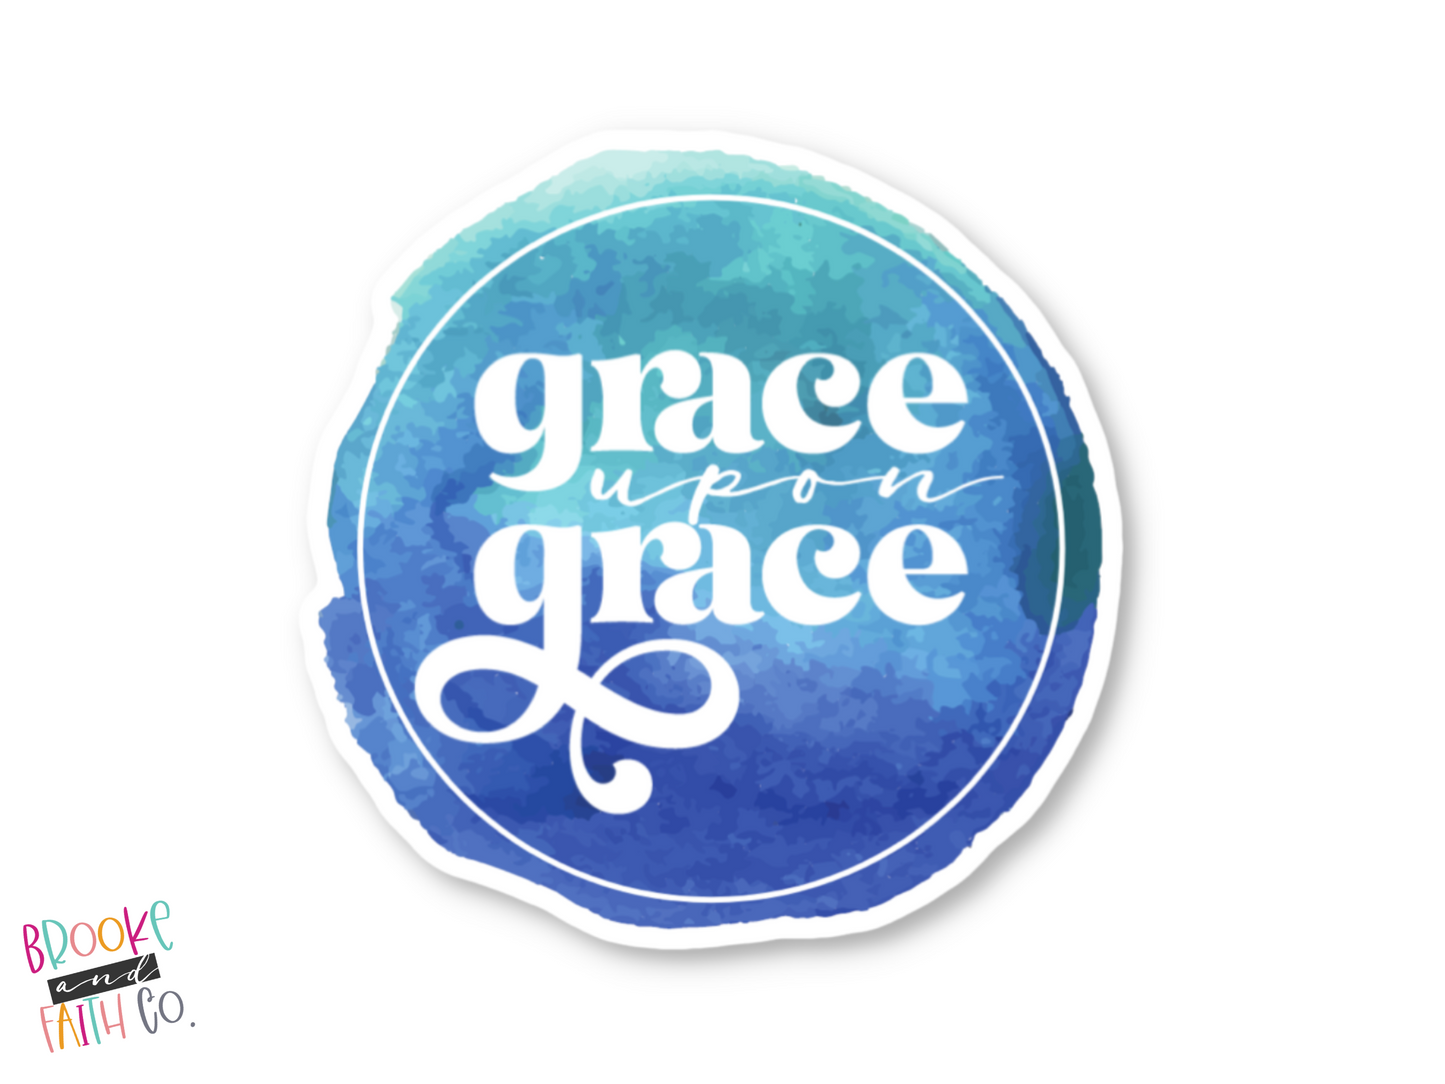 Grace Upon Grace Vinyl Sticker